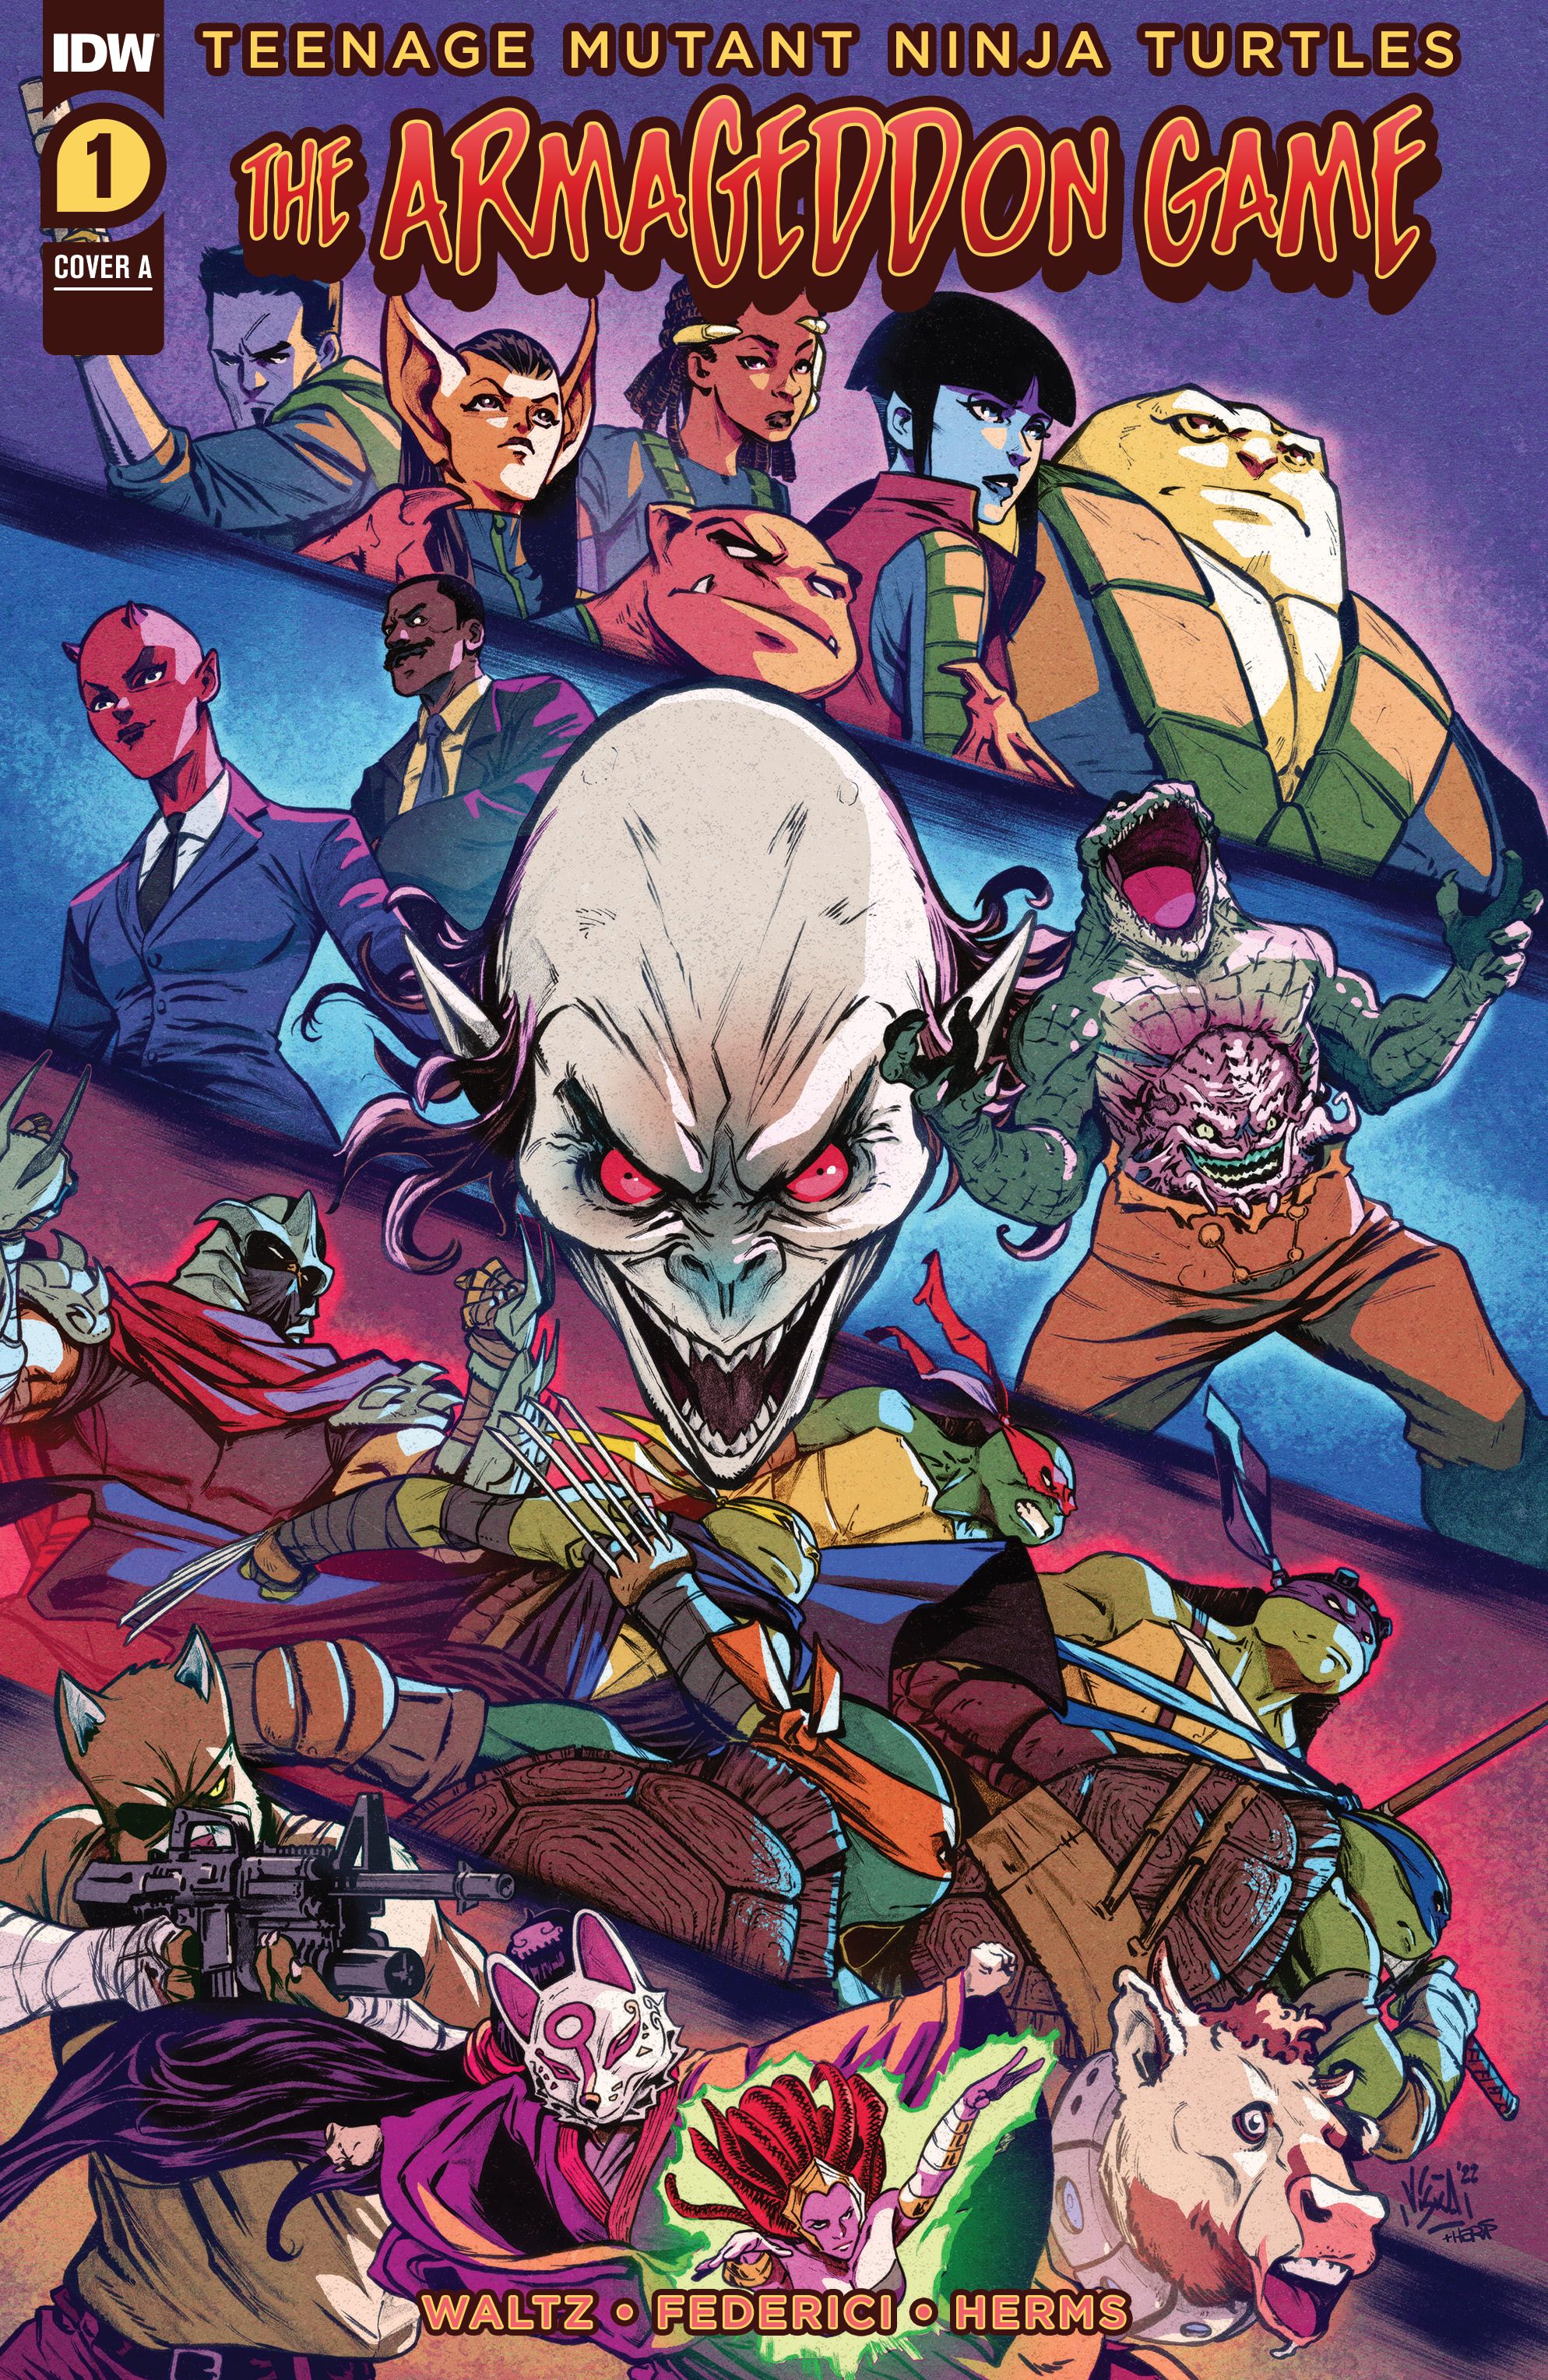 Teenage Mutant Ninja Turtles The Armageddon Game #1 Cover